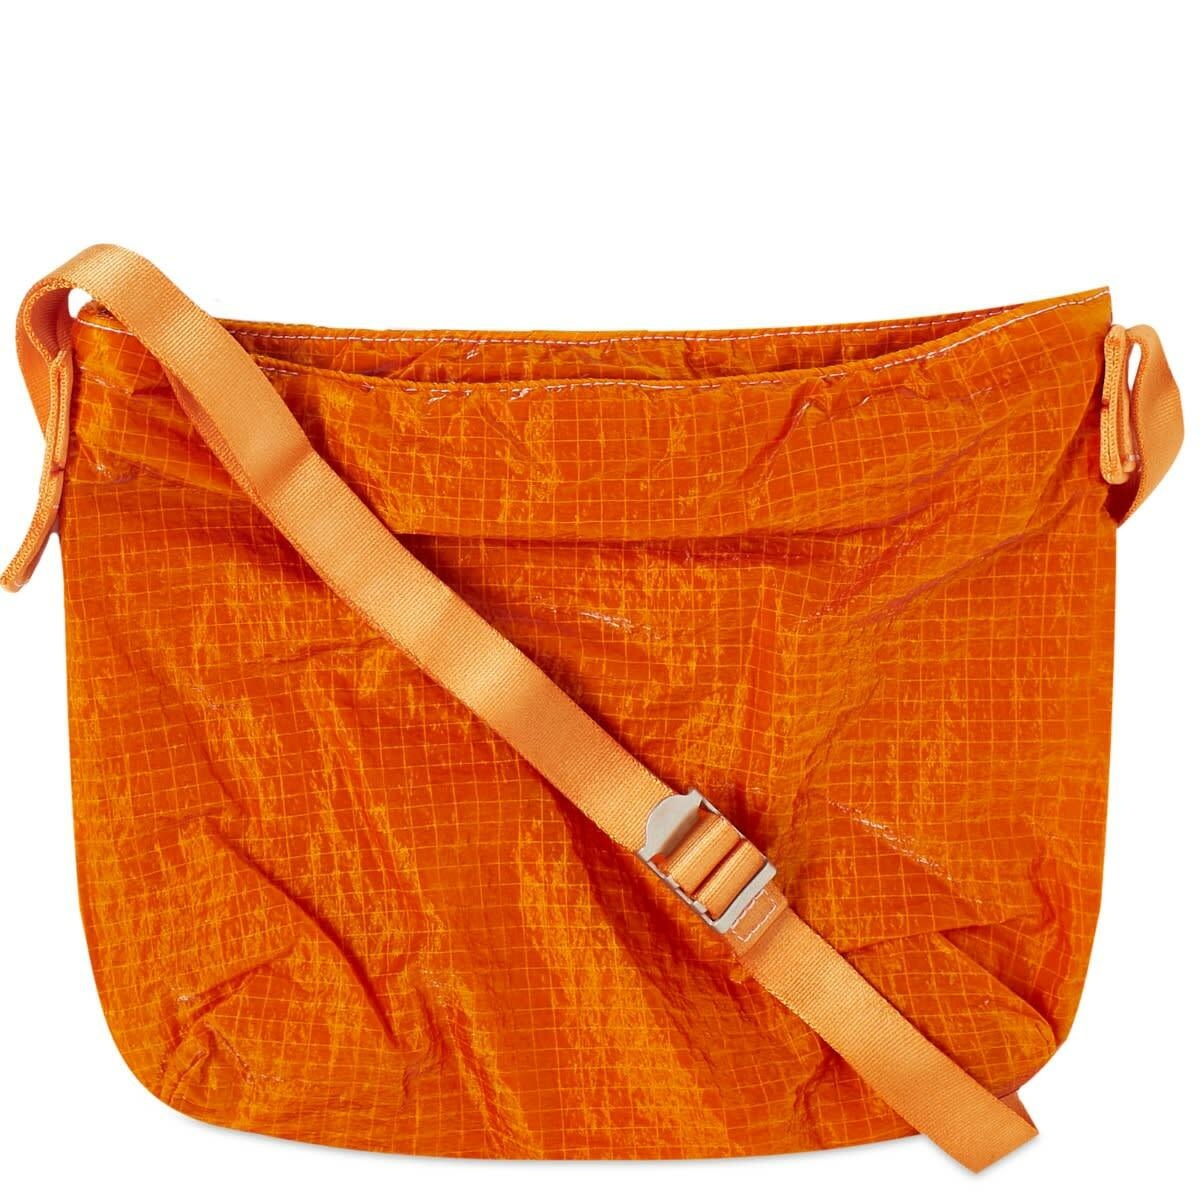 Hender Scheme Overdyed Cross Body Bag - Small in Orange Hender Scheme